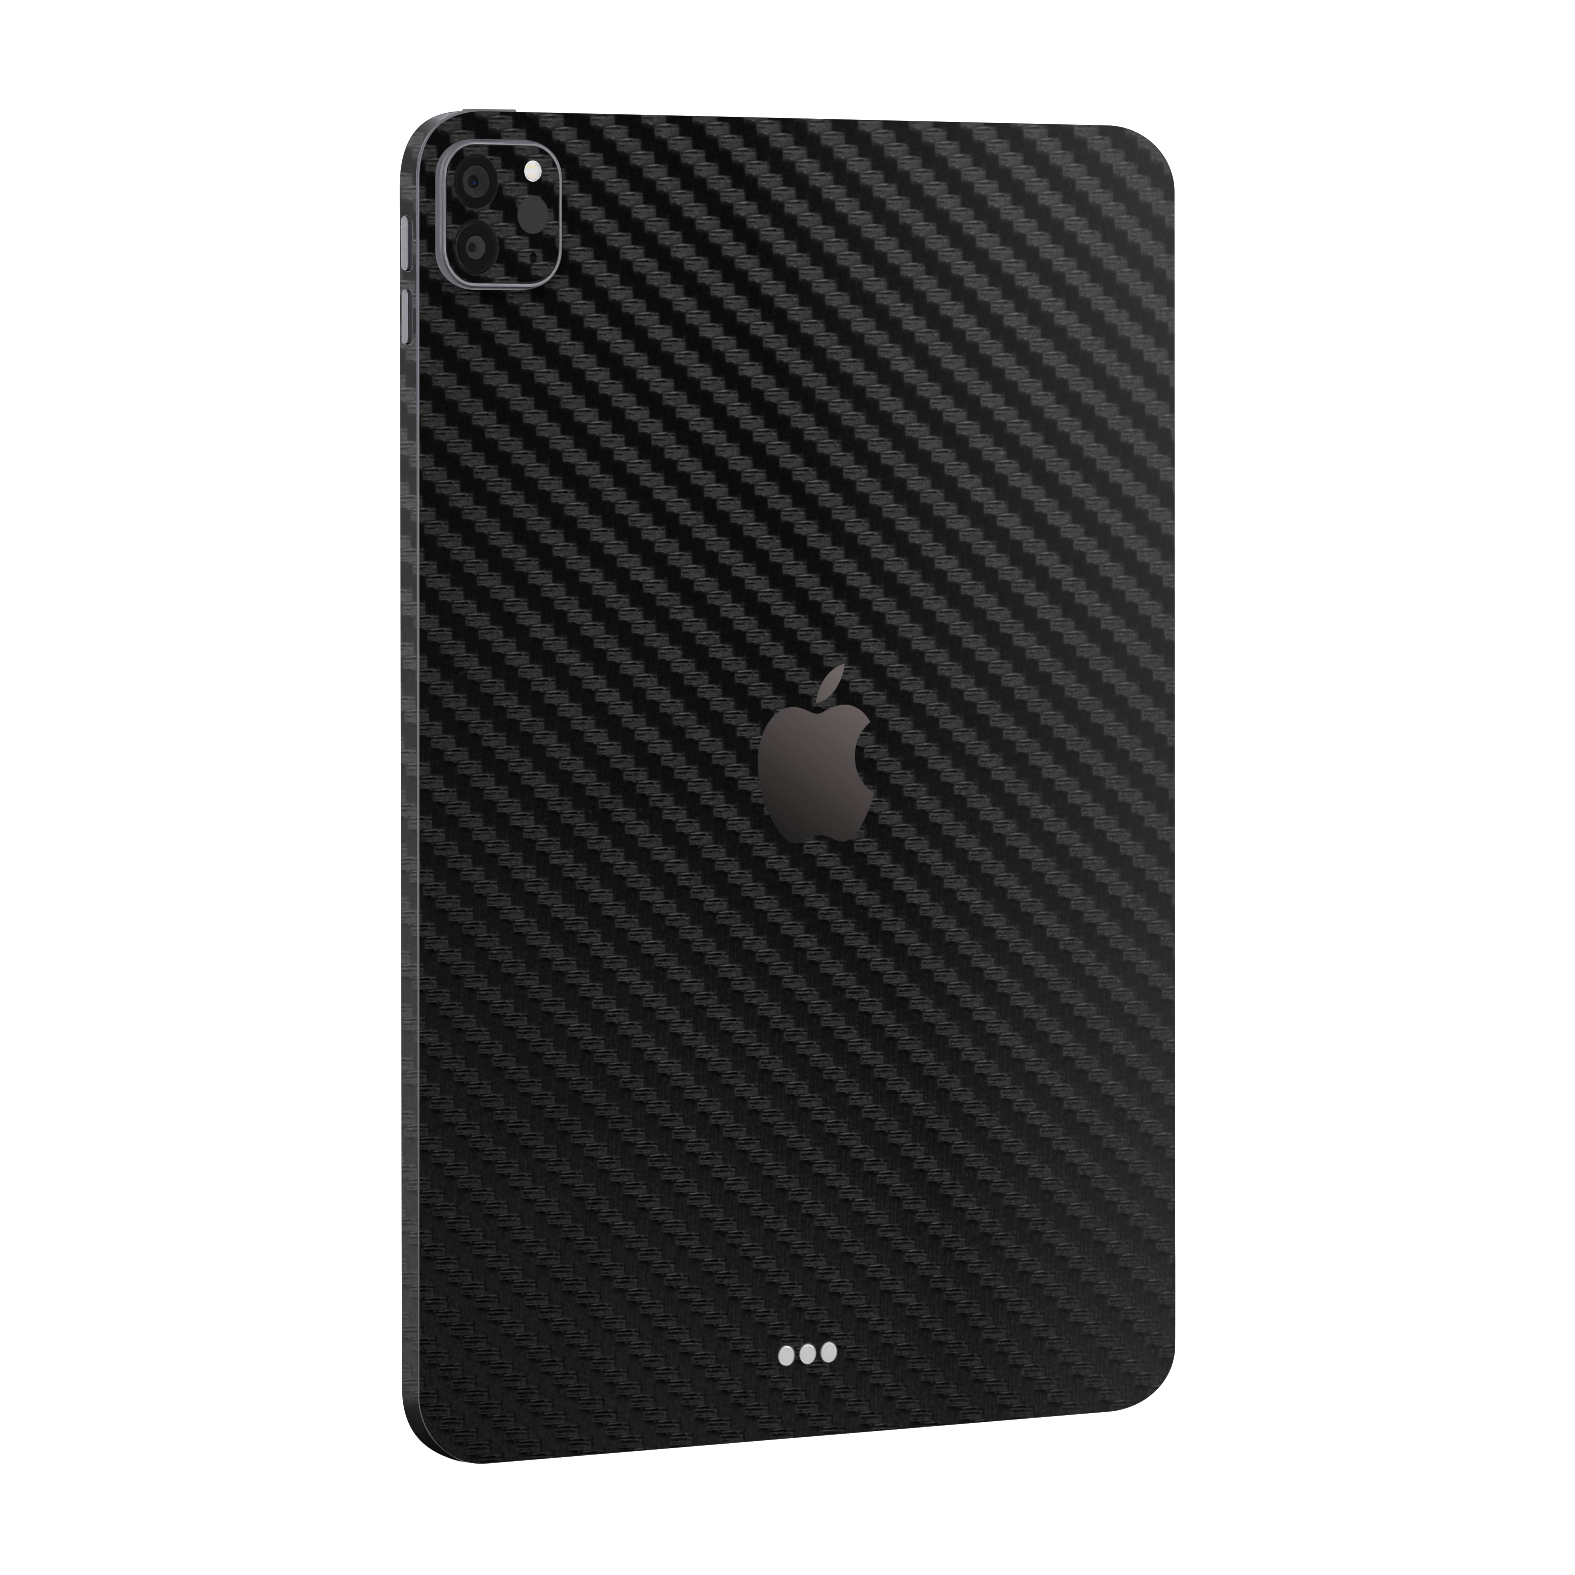 iPad PRO 12.9" (2020) Black 3D Textured Carbon Fibre Fiber Skin Wrap Sticker Decal Cover Protector by EasySkinz | EasySkinz.com